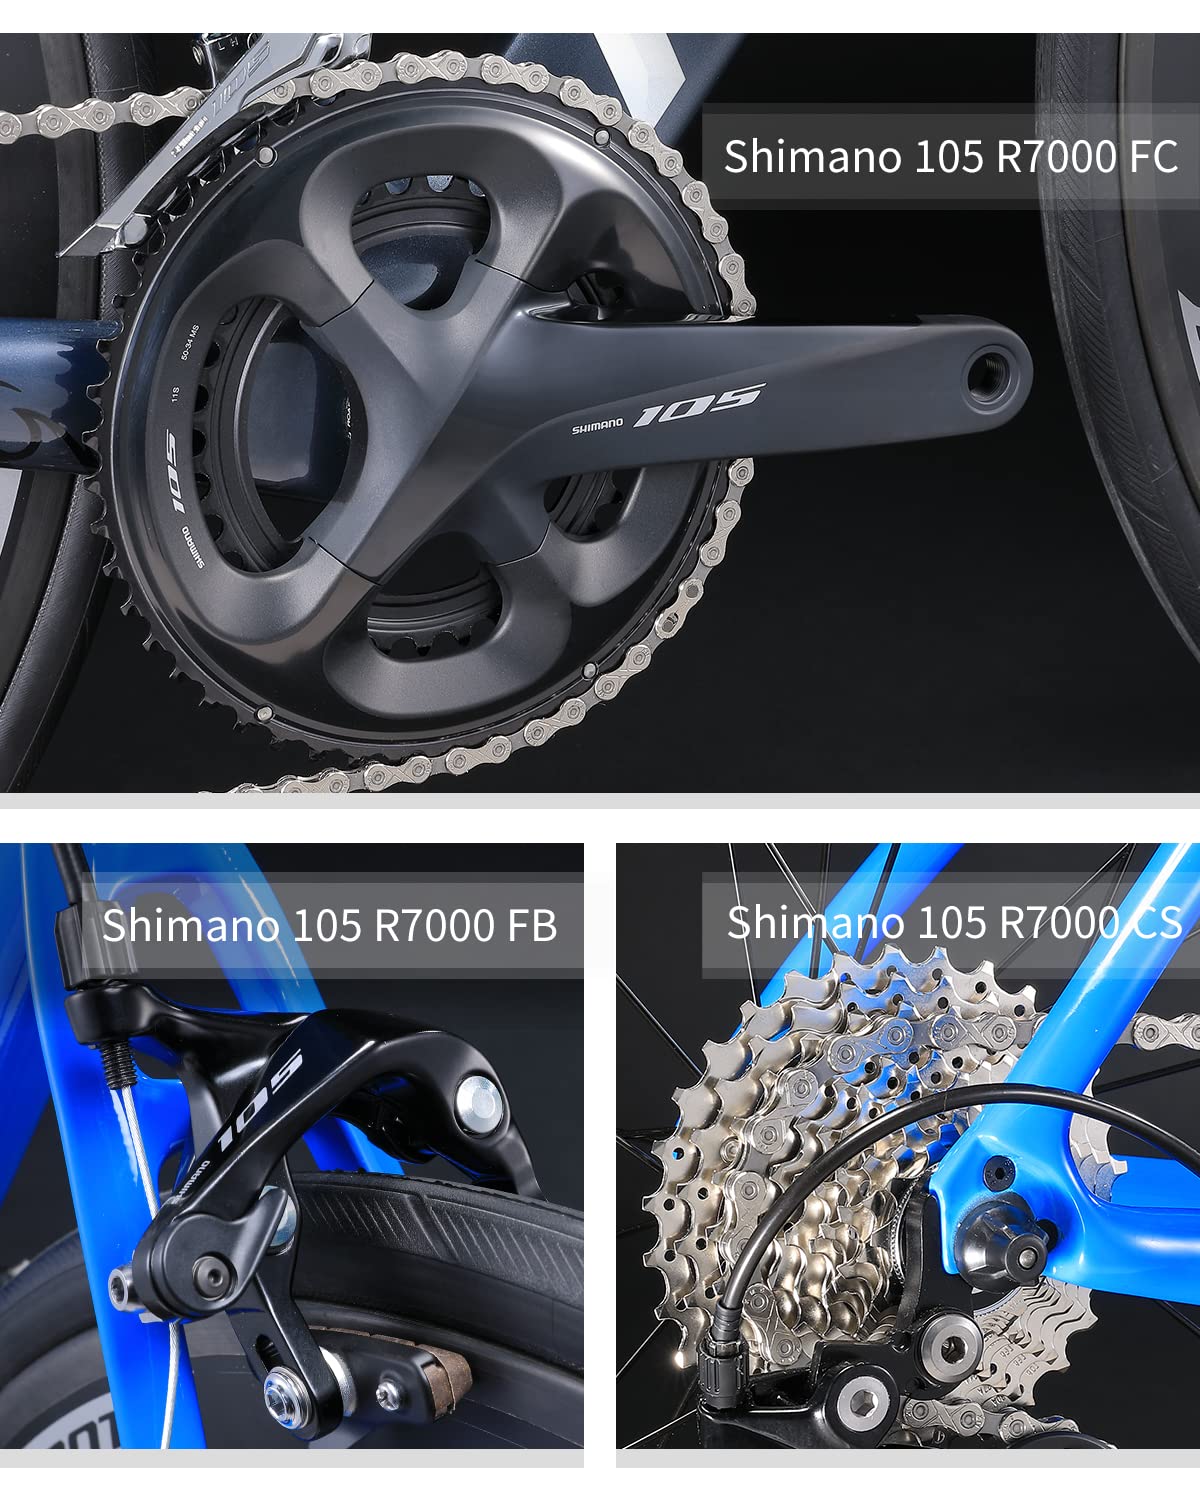 KOOTU V6 Carbon Road Bike Shimano 105 Groupset 22 Speed